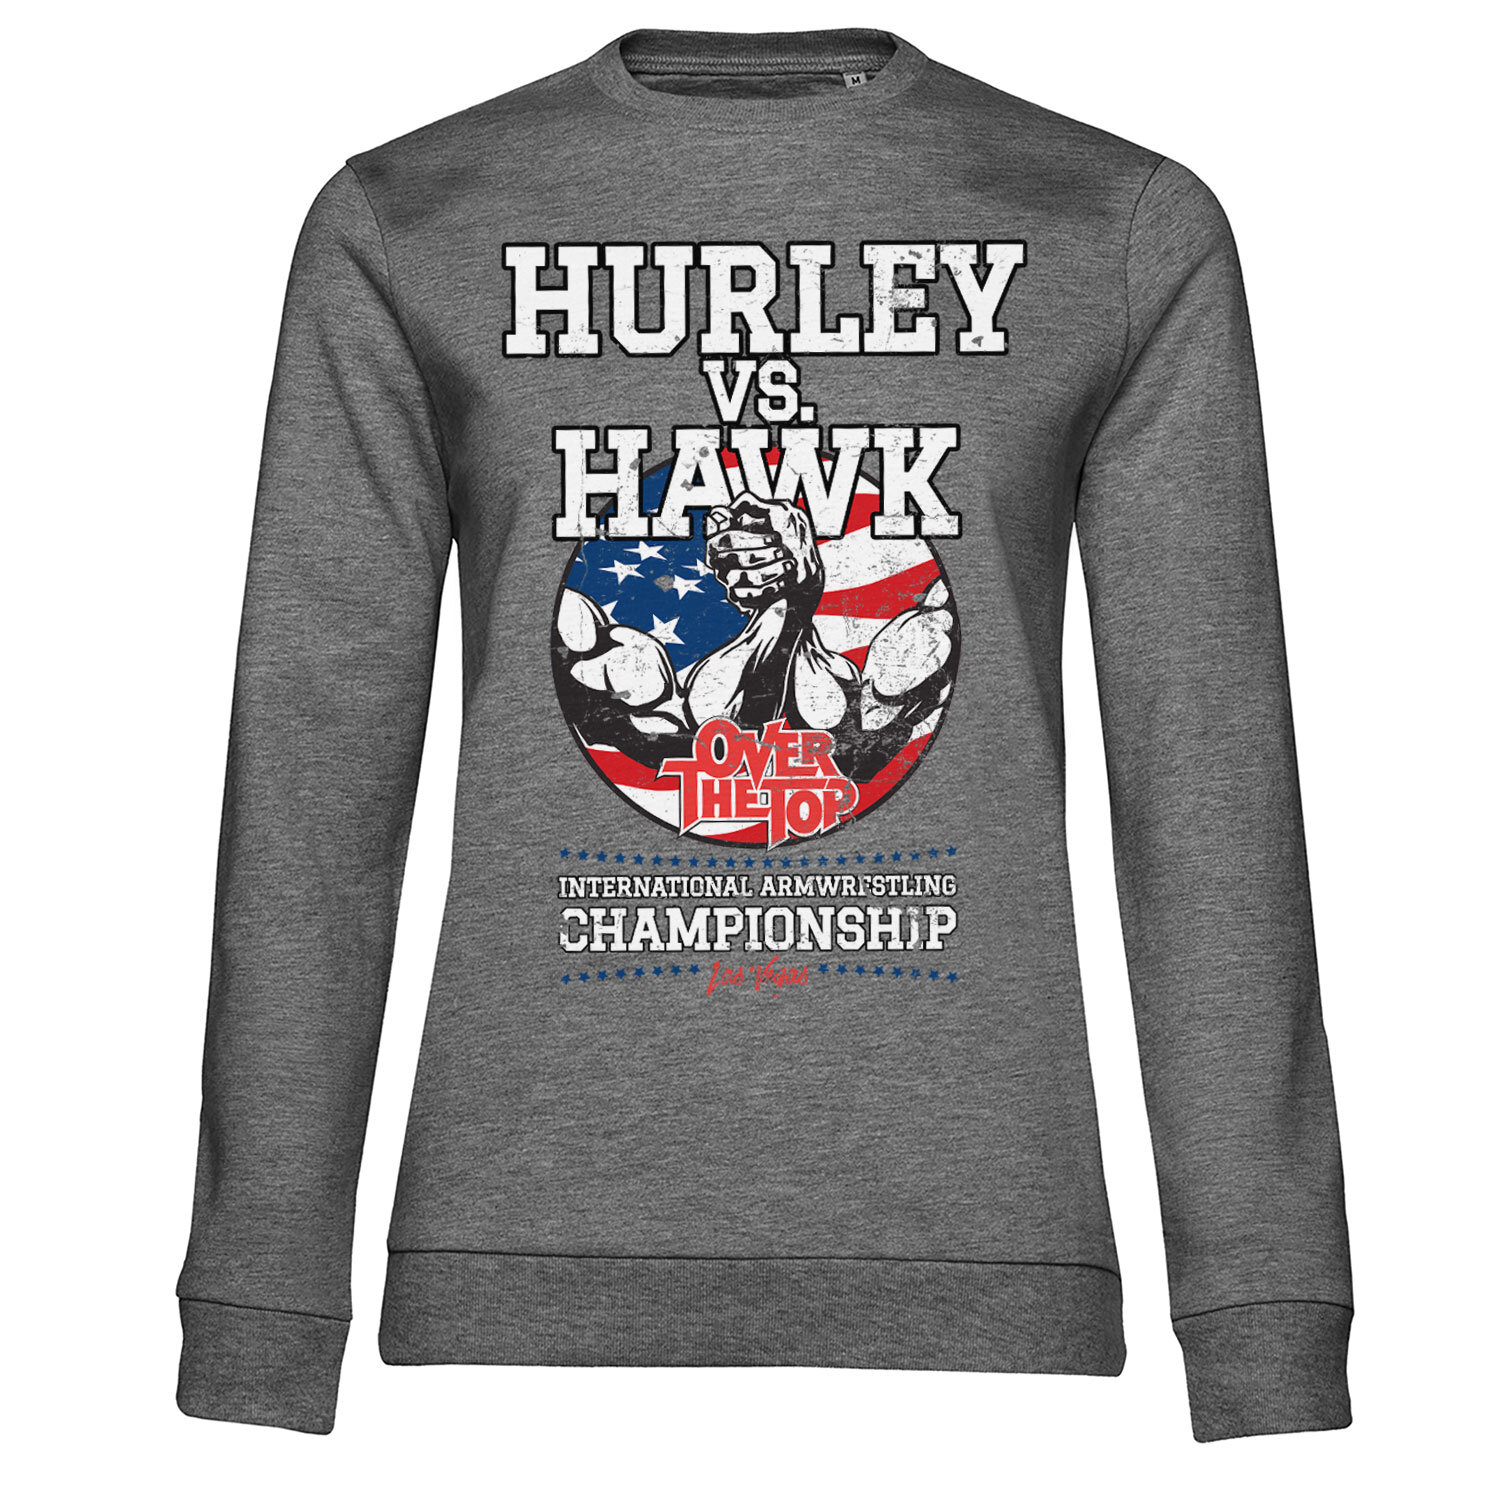 Hurley Vs. Hawk Girly Sweatshirt